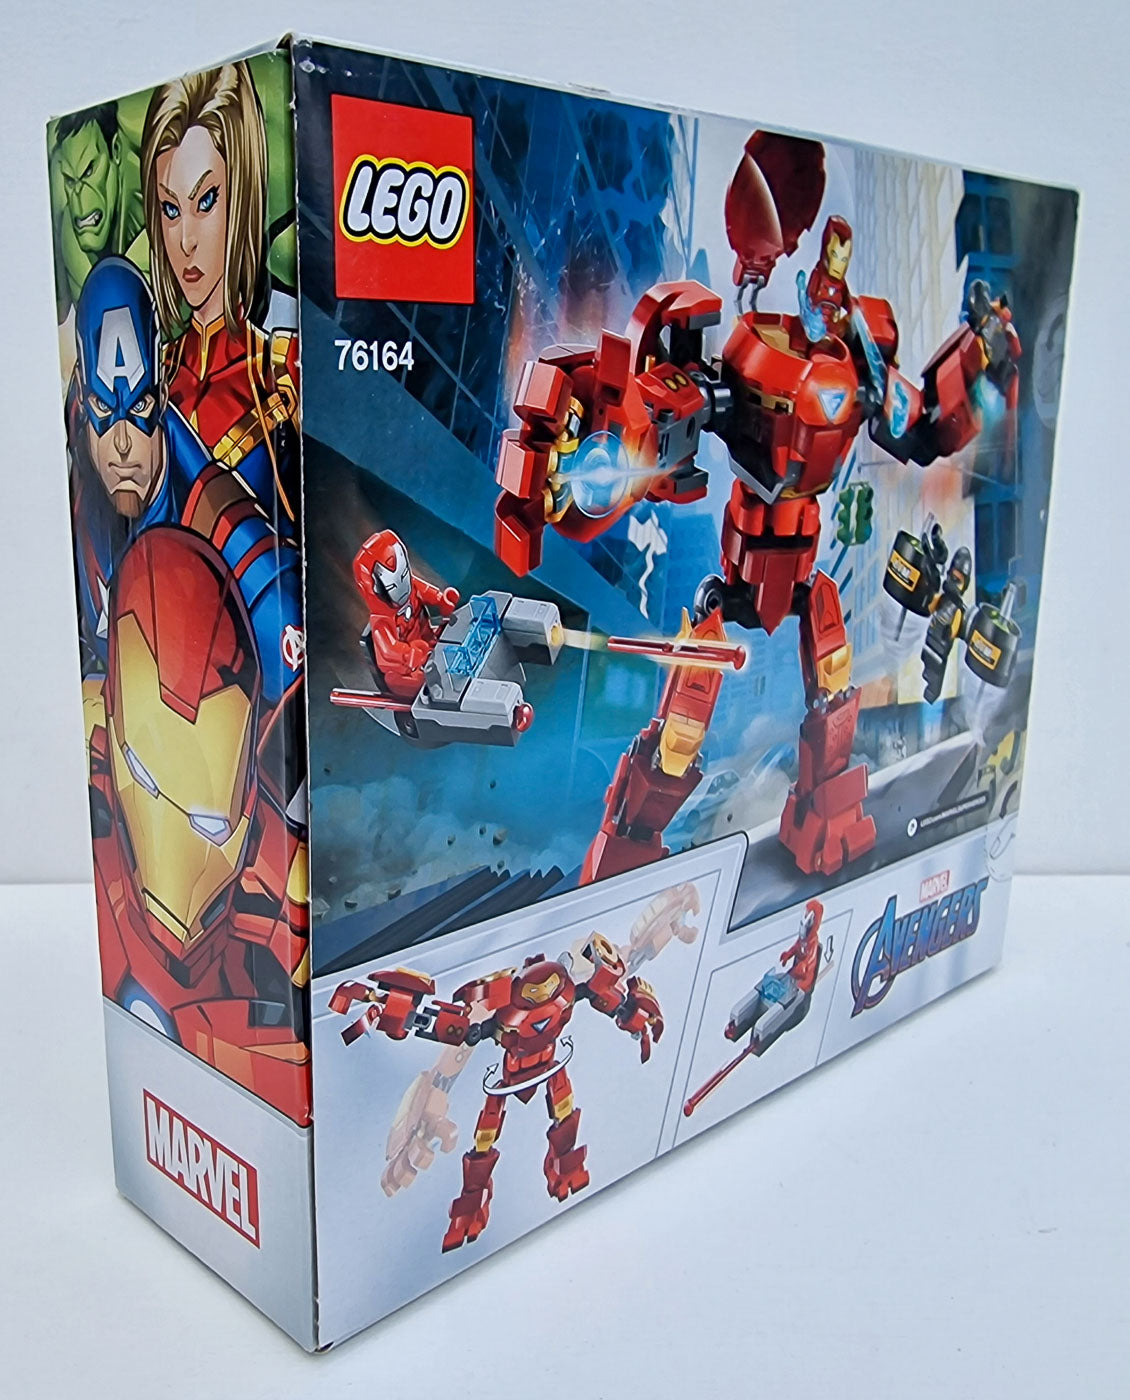 LEGO 76164 Super Heroes Marvel Iron Man Hulkbuster versus A.I.M. Agent